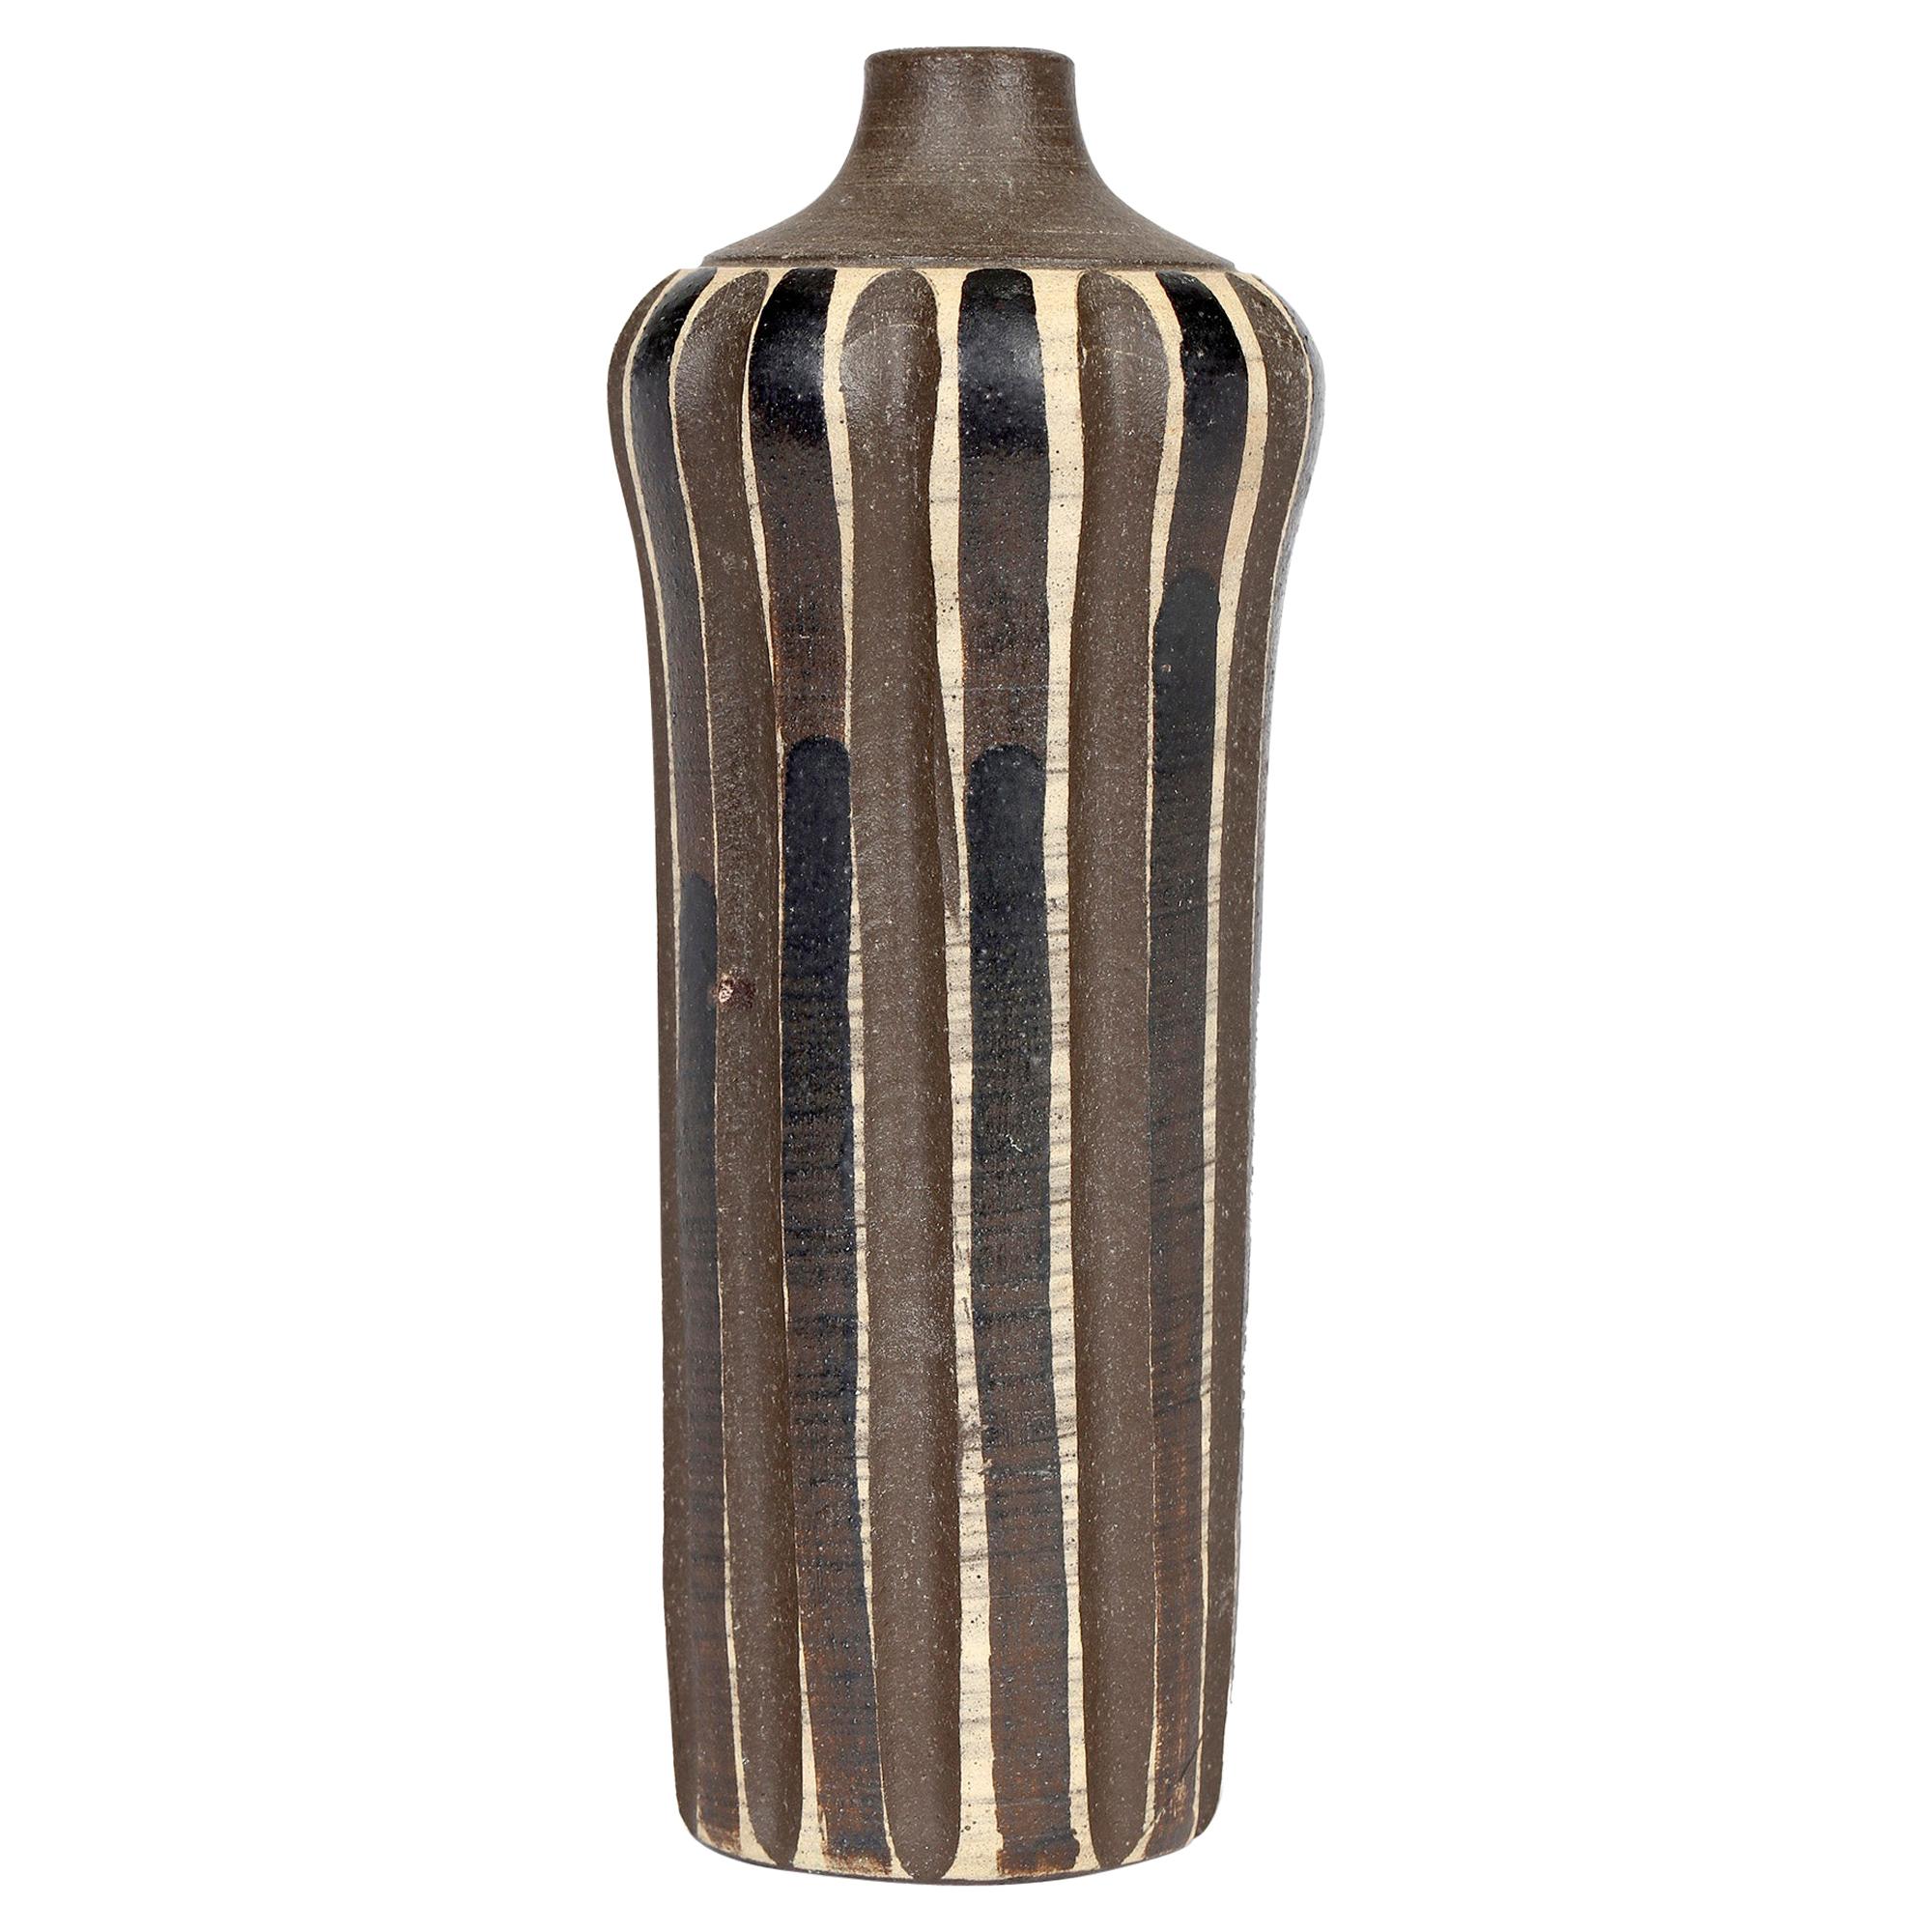 Vase en poterie vernissée noire et brune du Bauhaus allemand Heiner Hans Körting